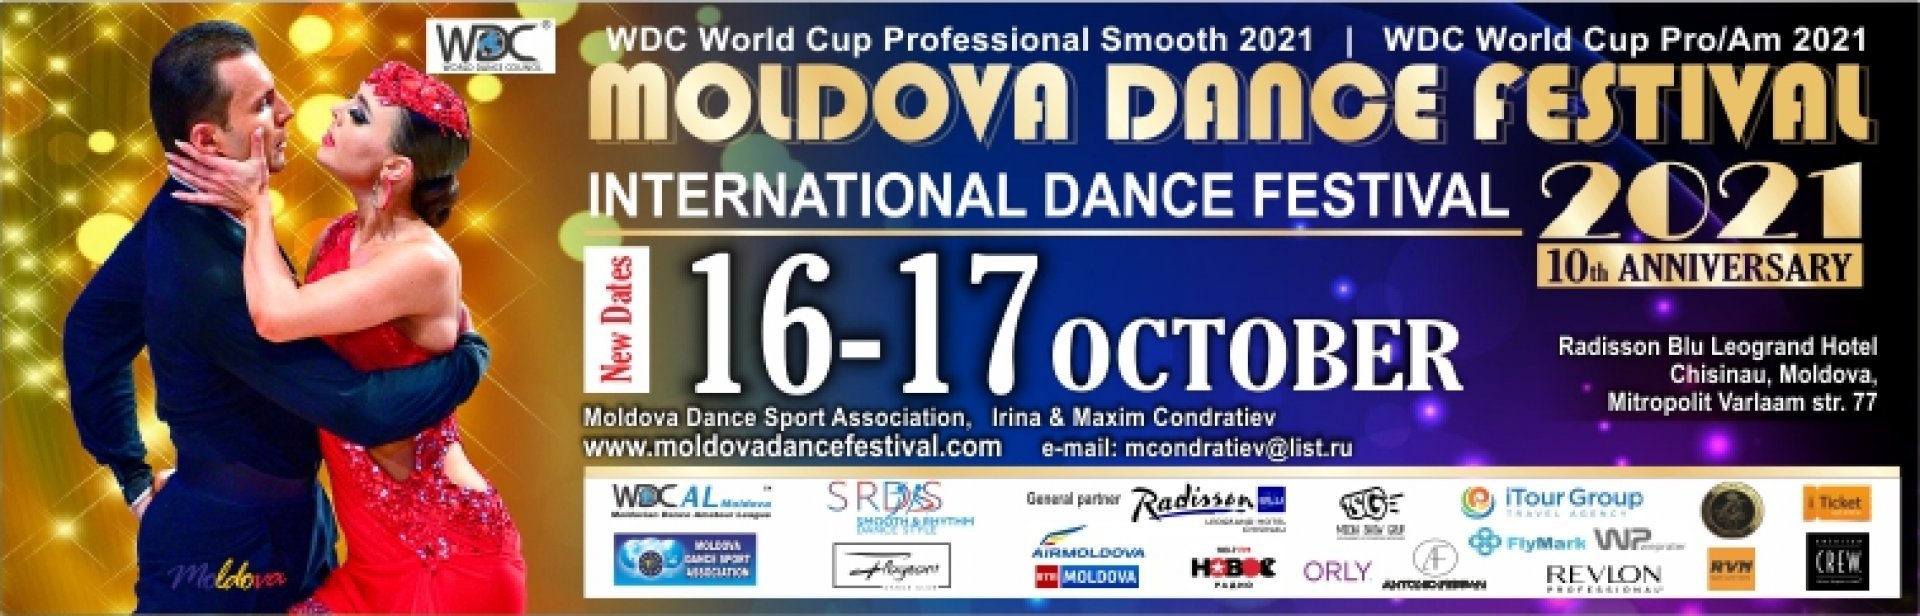 16 Octombrie 12:00-14:00 - Moldova Dance Festival 2021